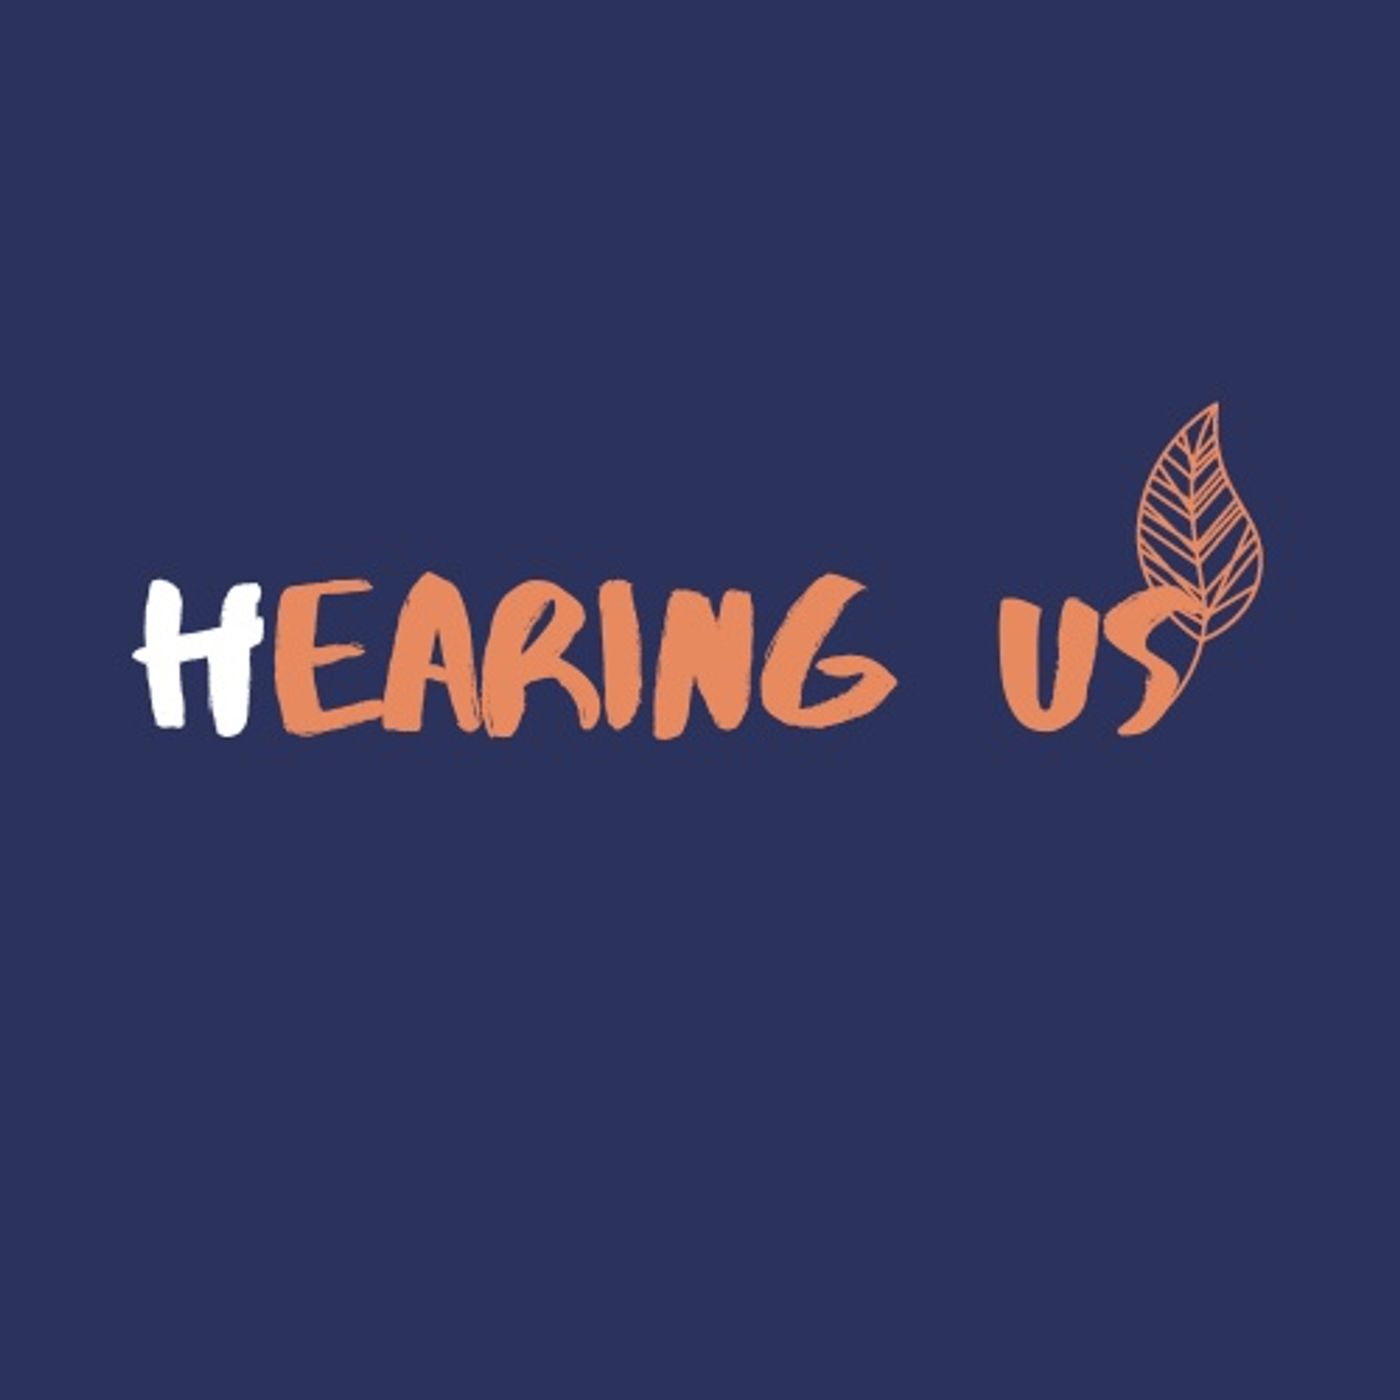 Hearing Us